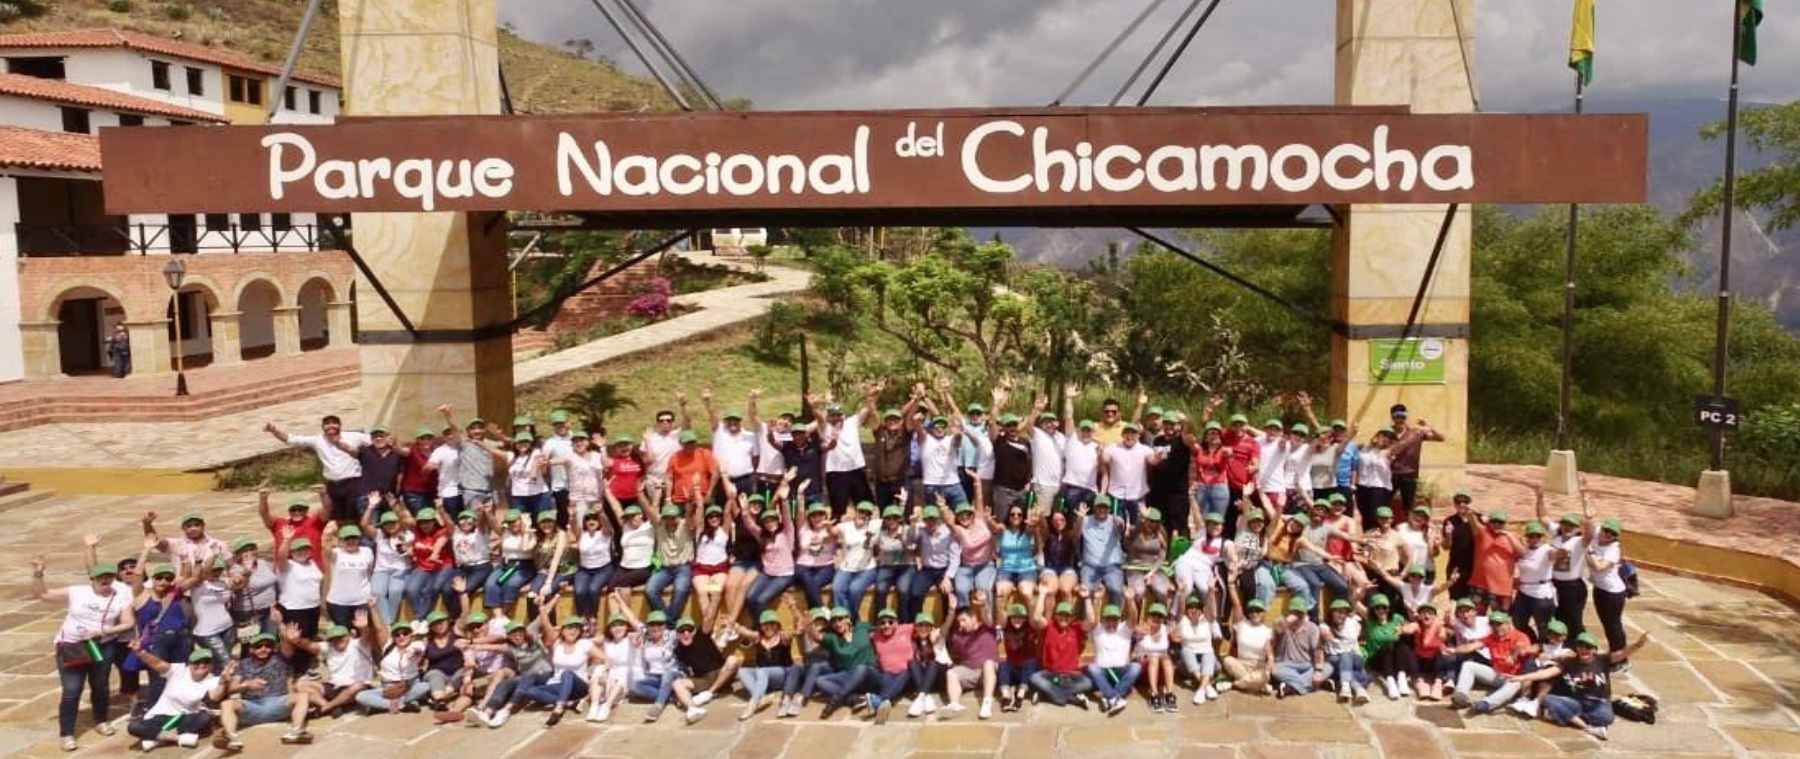 Colaboradores de Grünenthal en el Parque Nacional de Chicamocha